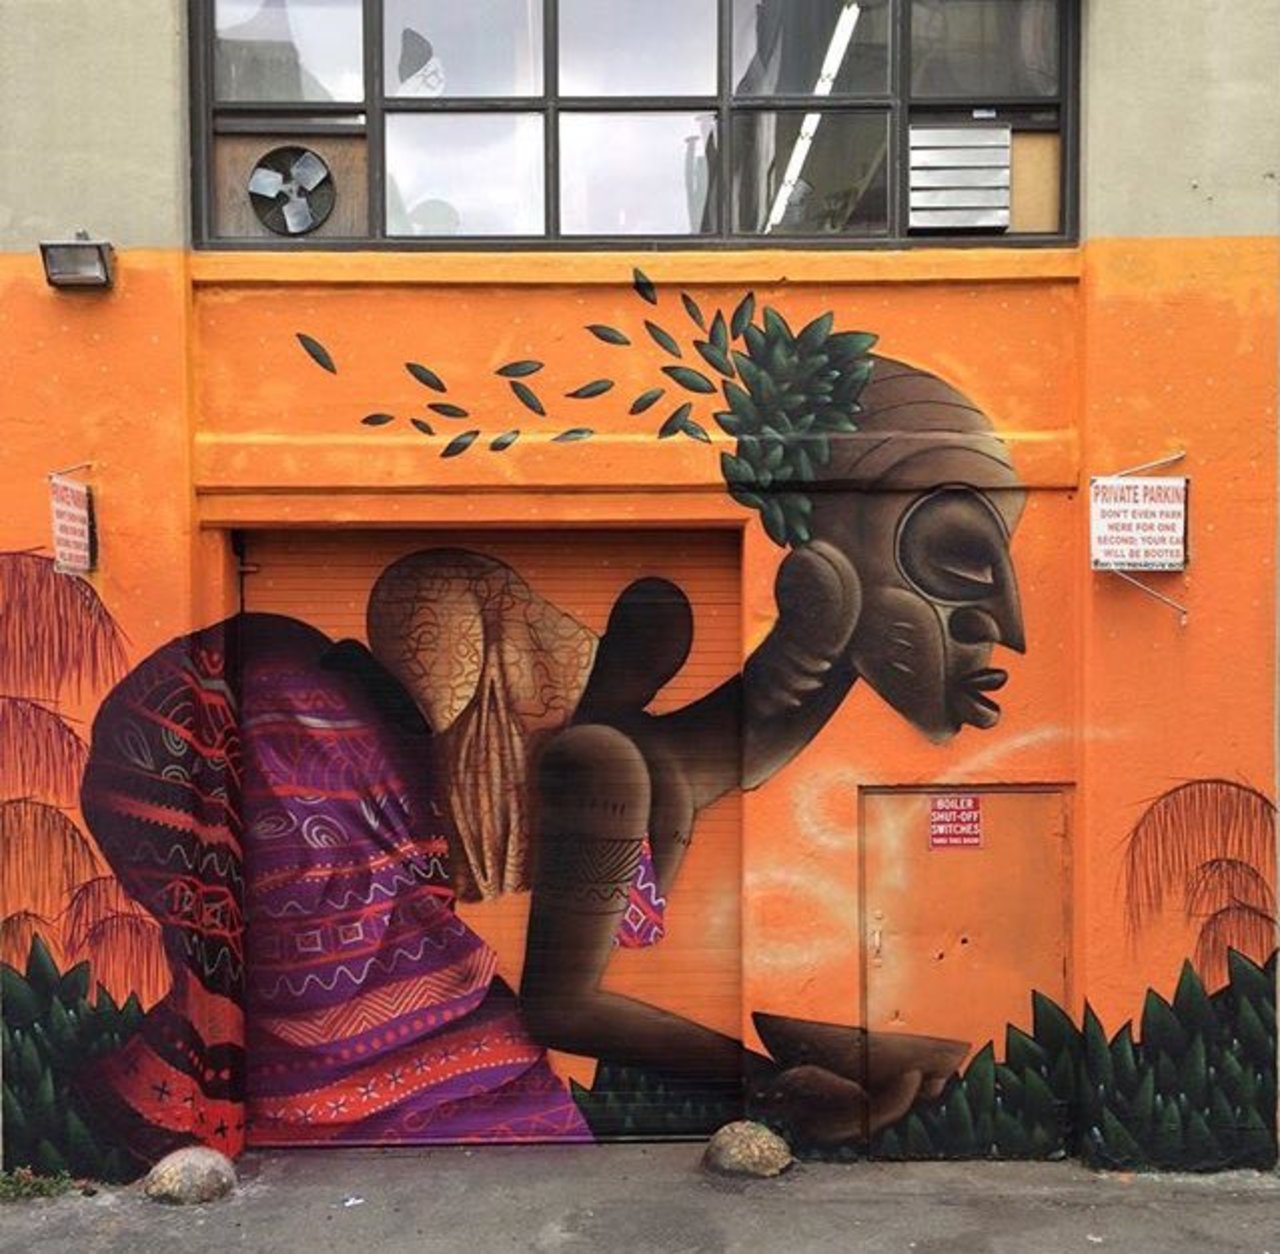 RT @72SLICK: New Street Art by Alexandre Keto in NYC 

#art #graffiti #mural #streetart https://t.co/cQMhKU6JM9